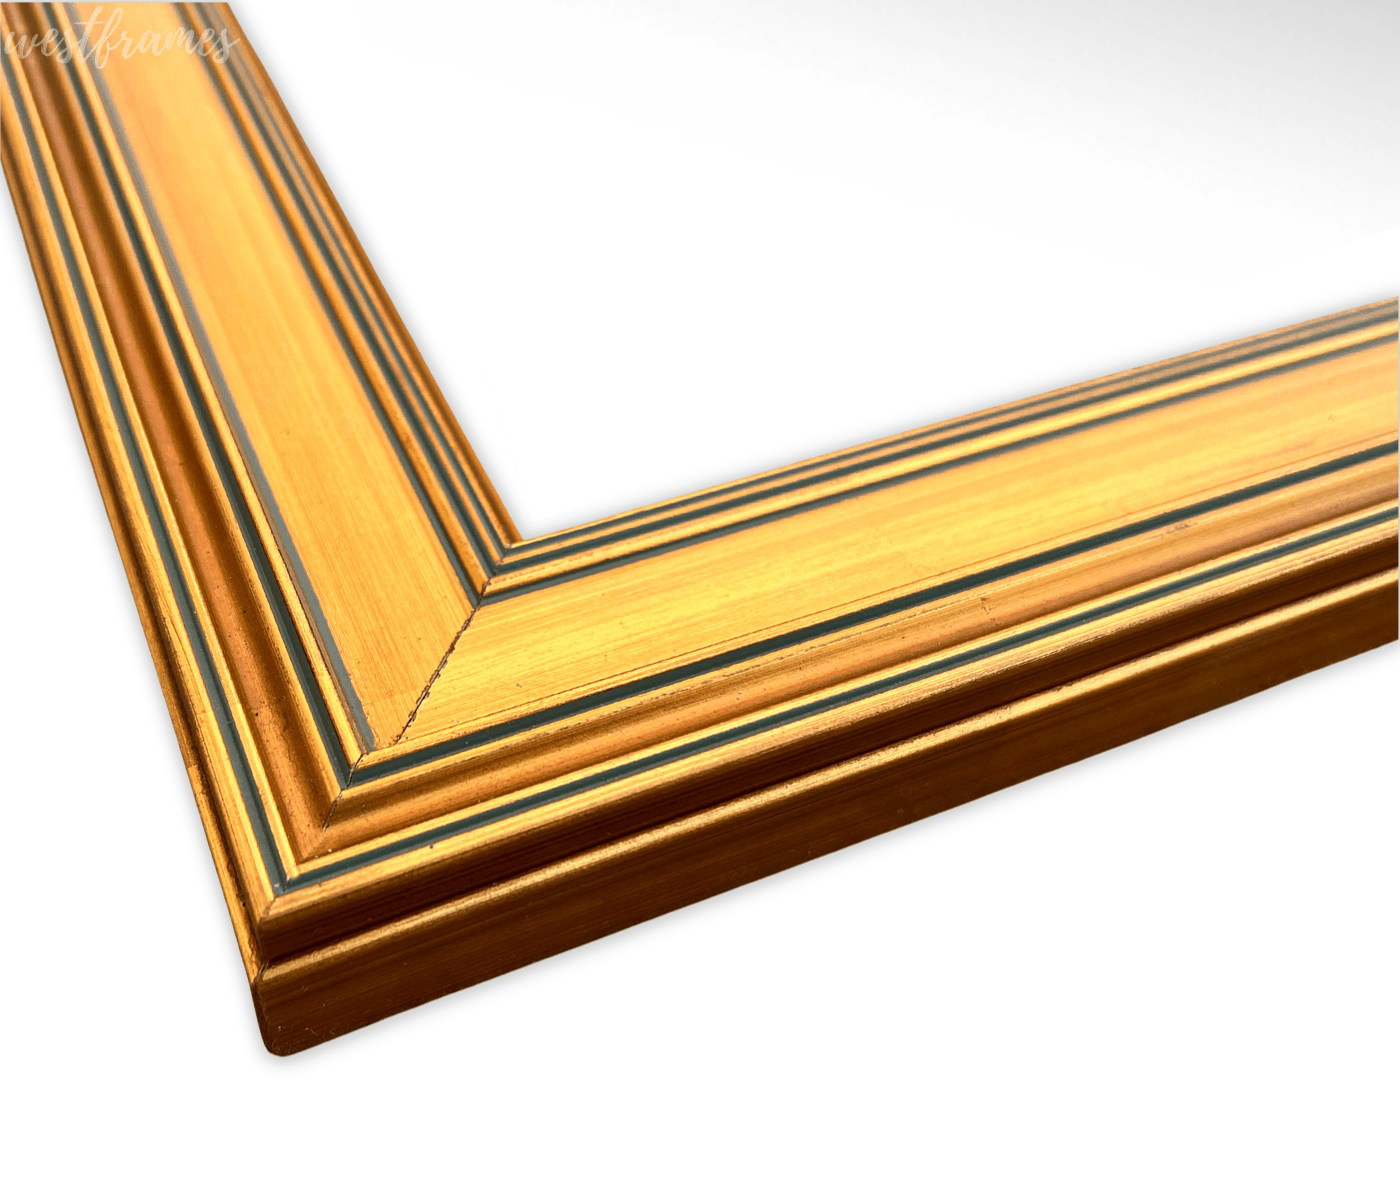 Gallery Classic Antique Gold Leaf Wood Framed Wall Mirror 2" - West Frames